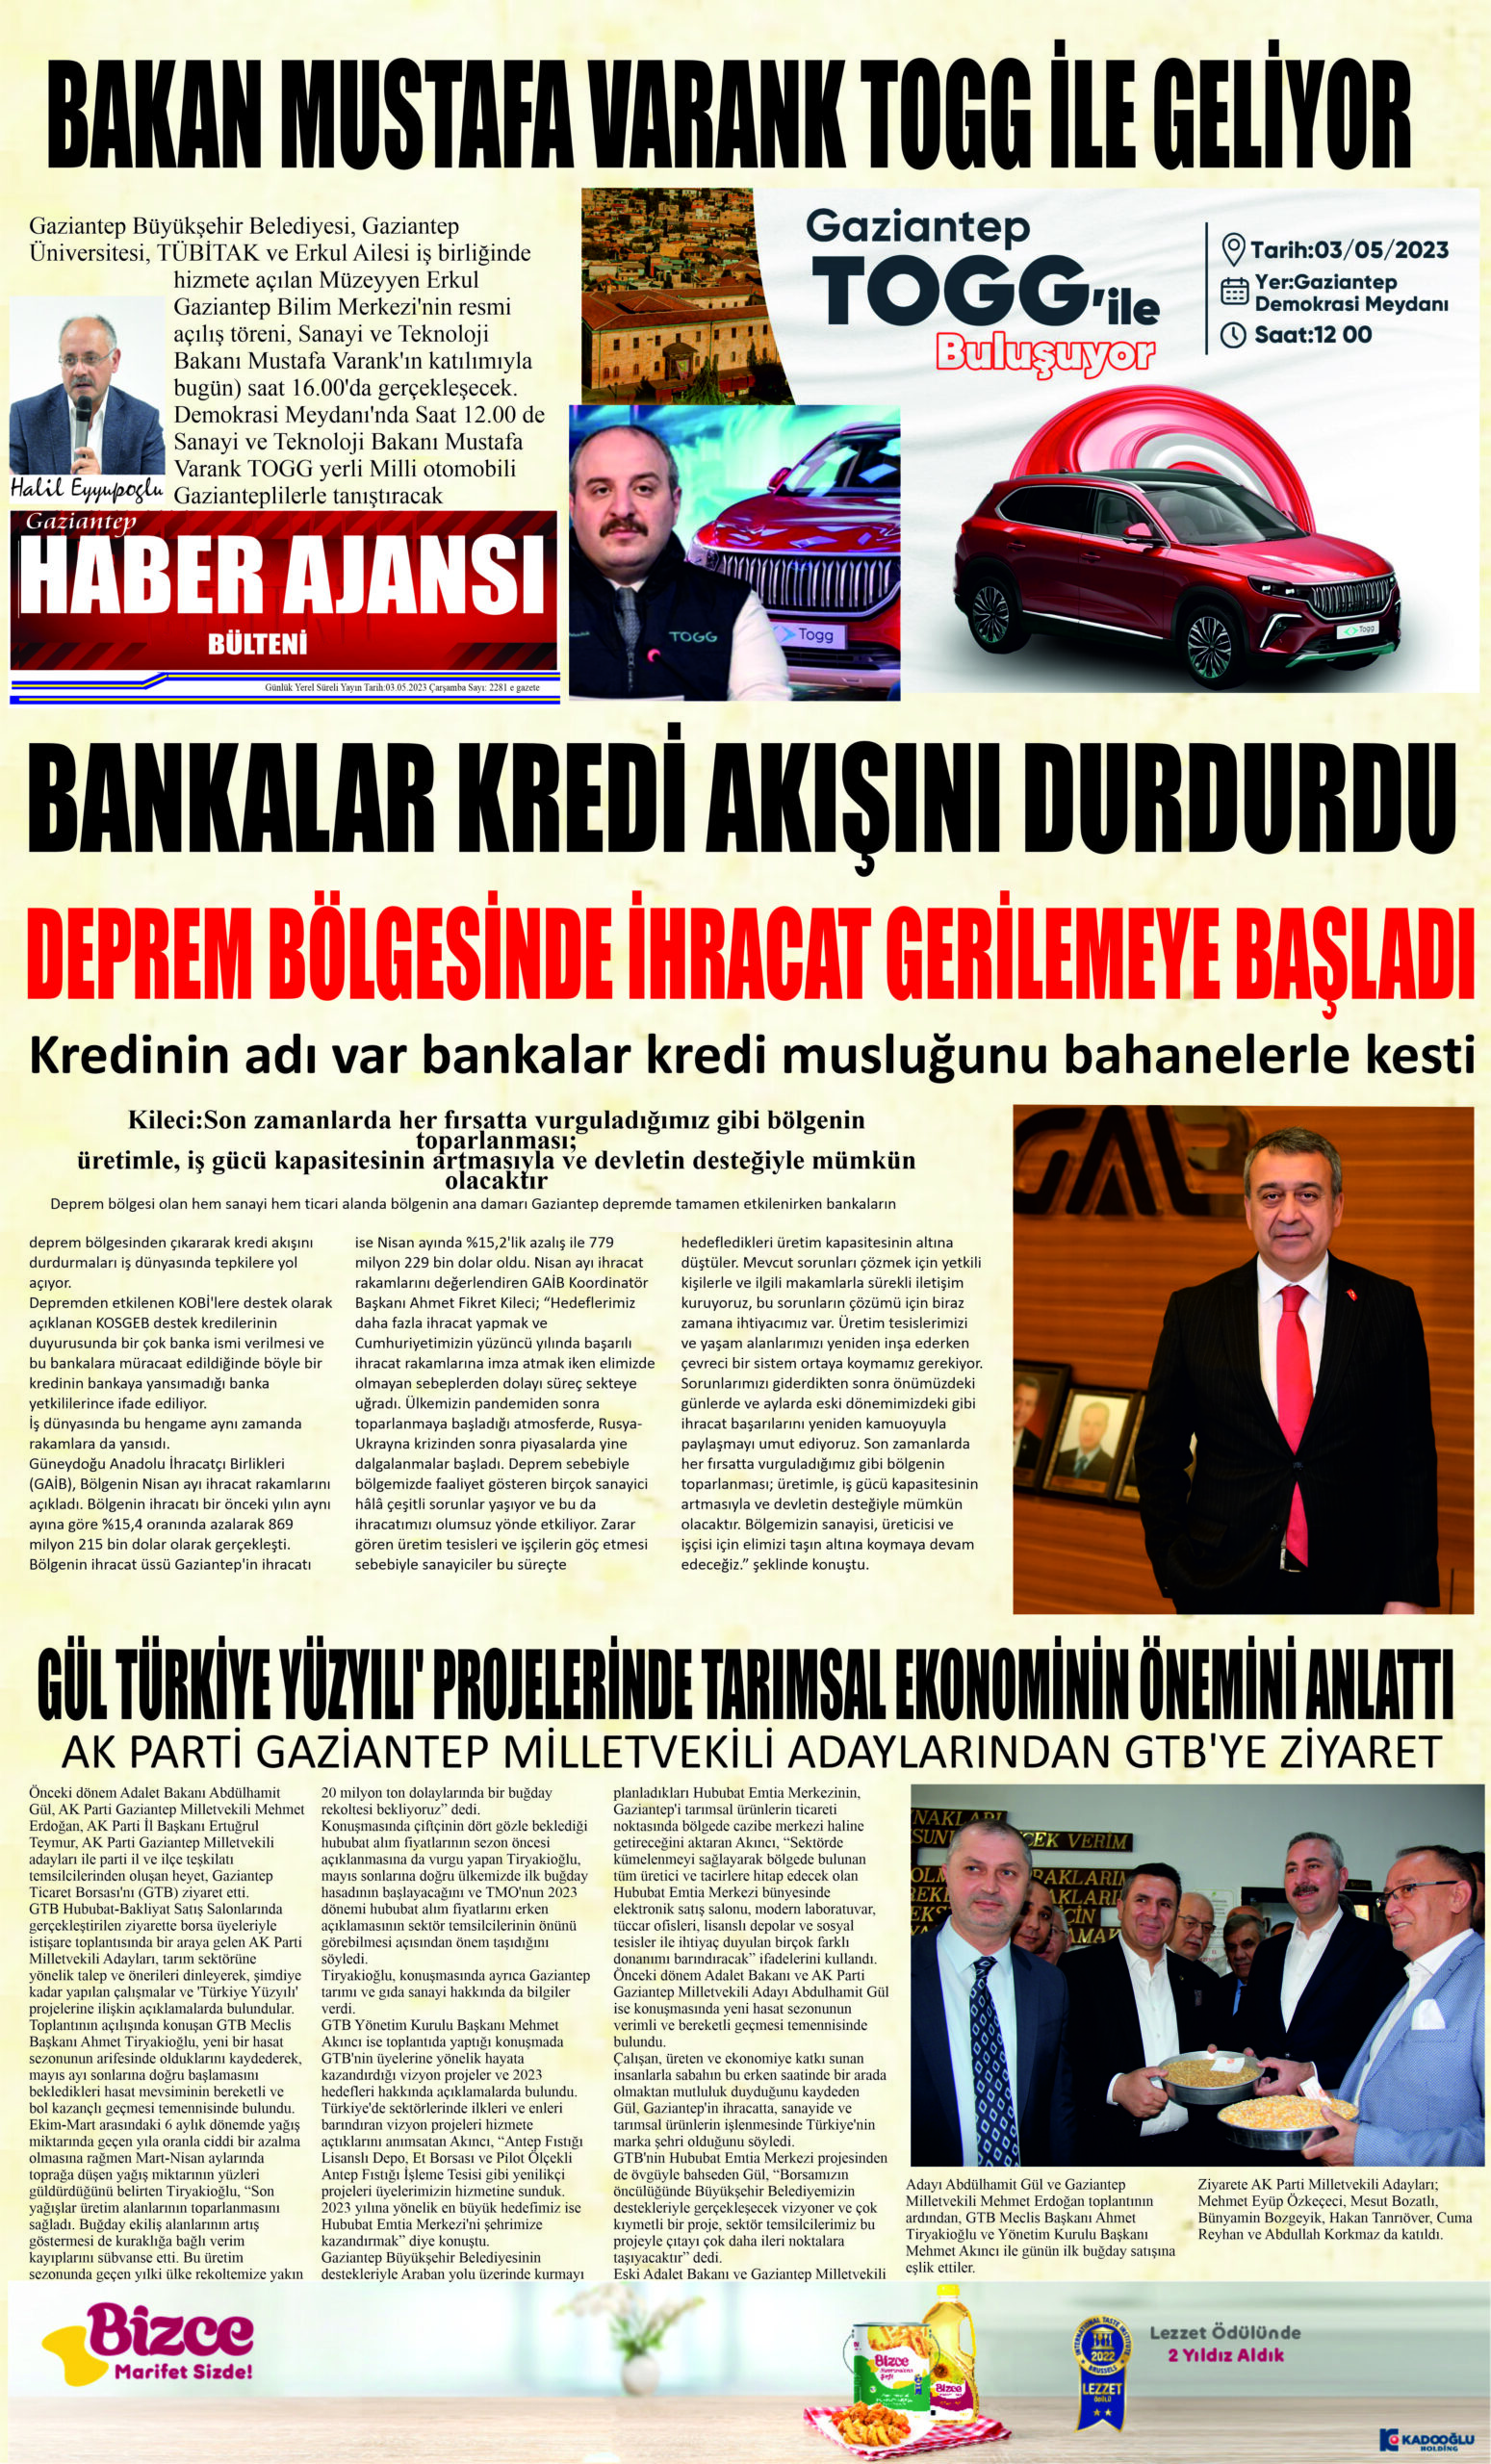 Gaziantep Haber Ajansı Bülteni Çarşamba 03.05.2023 e gazete